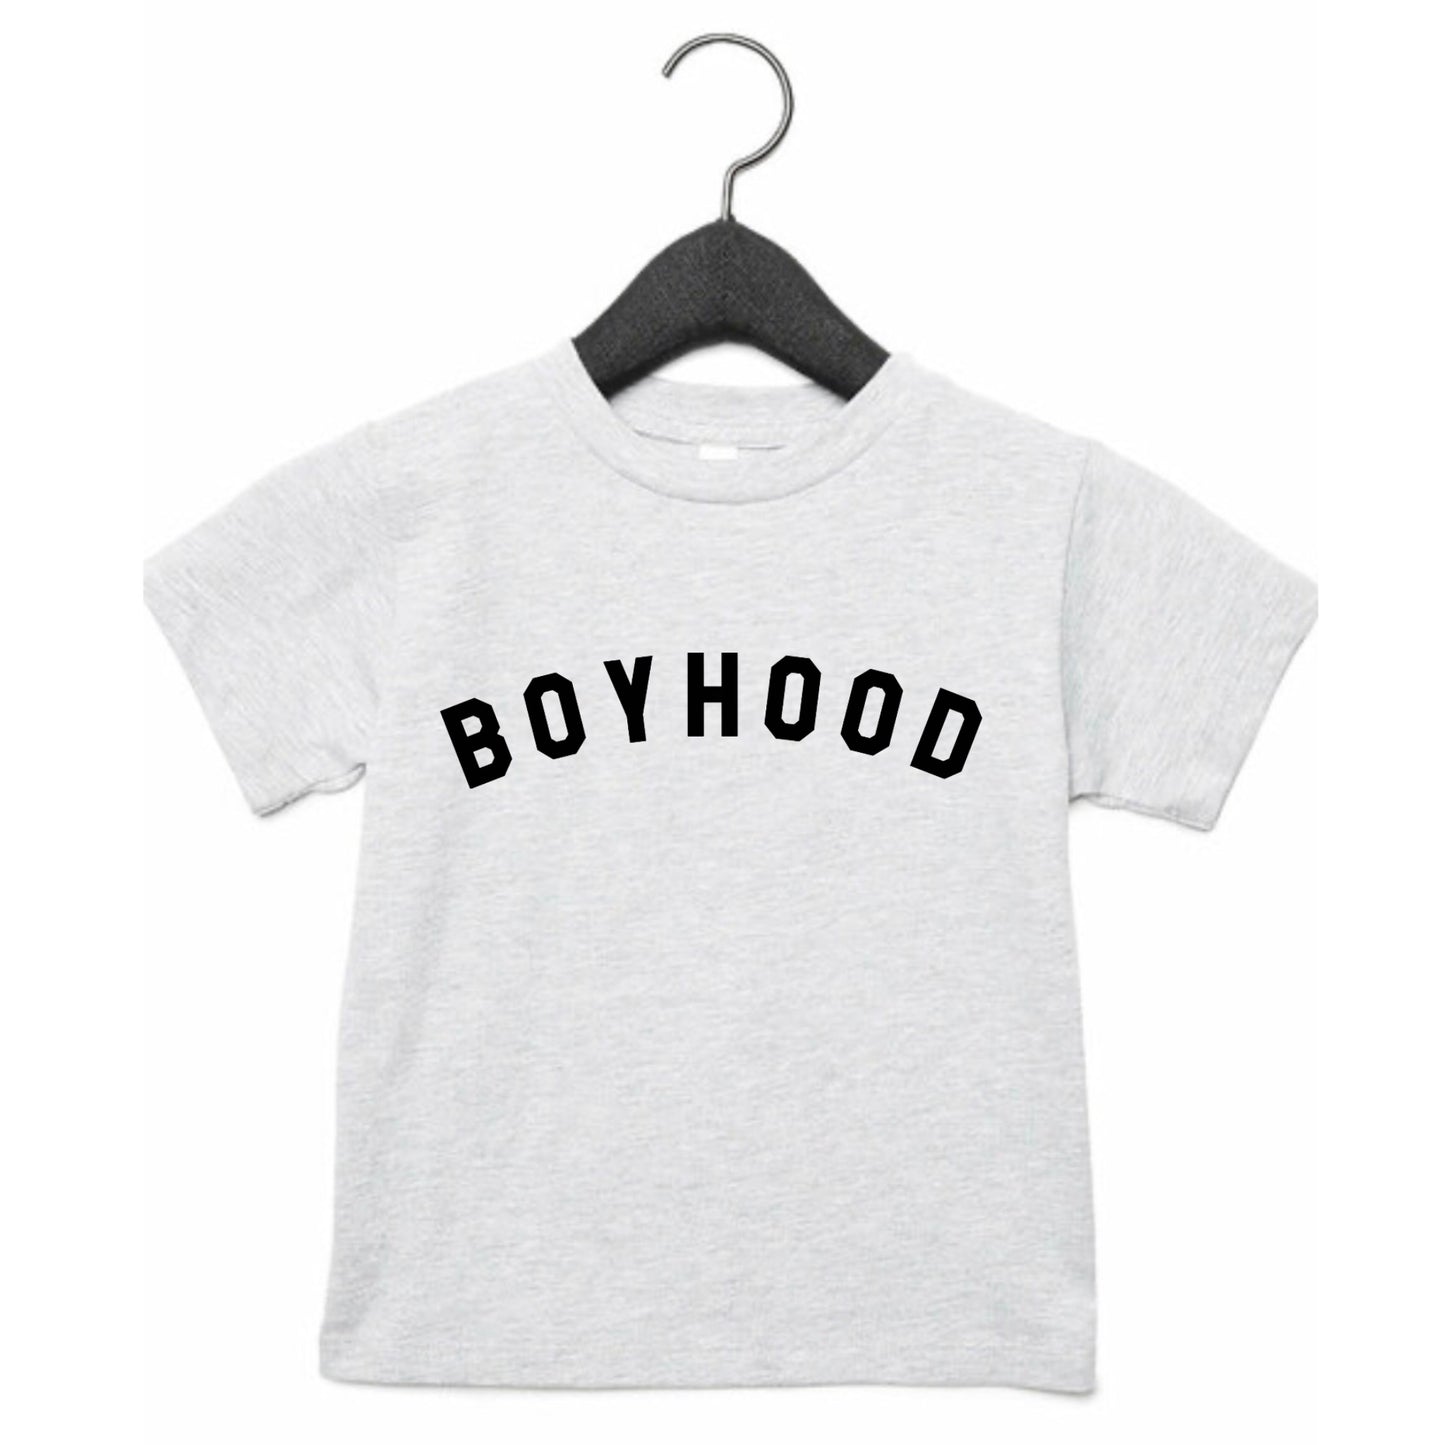 Boyhood Kids Shirt